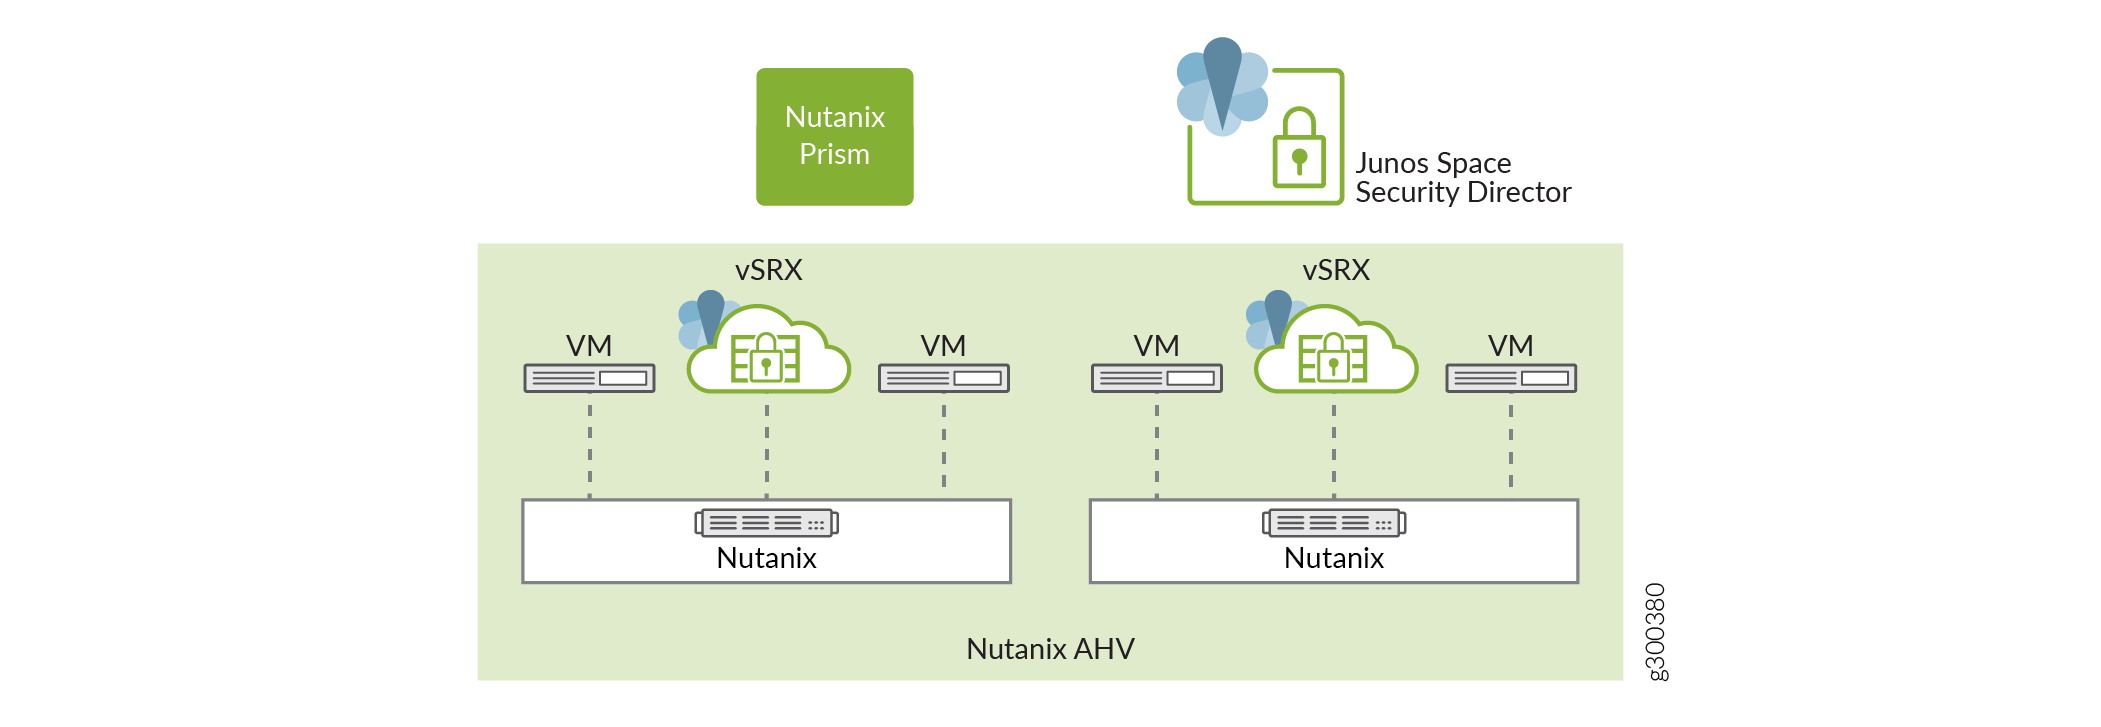 vSRX Virtual Firewall Deployment in Nutanix Enterprise Cloud